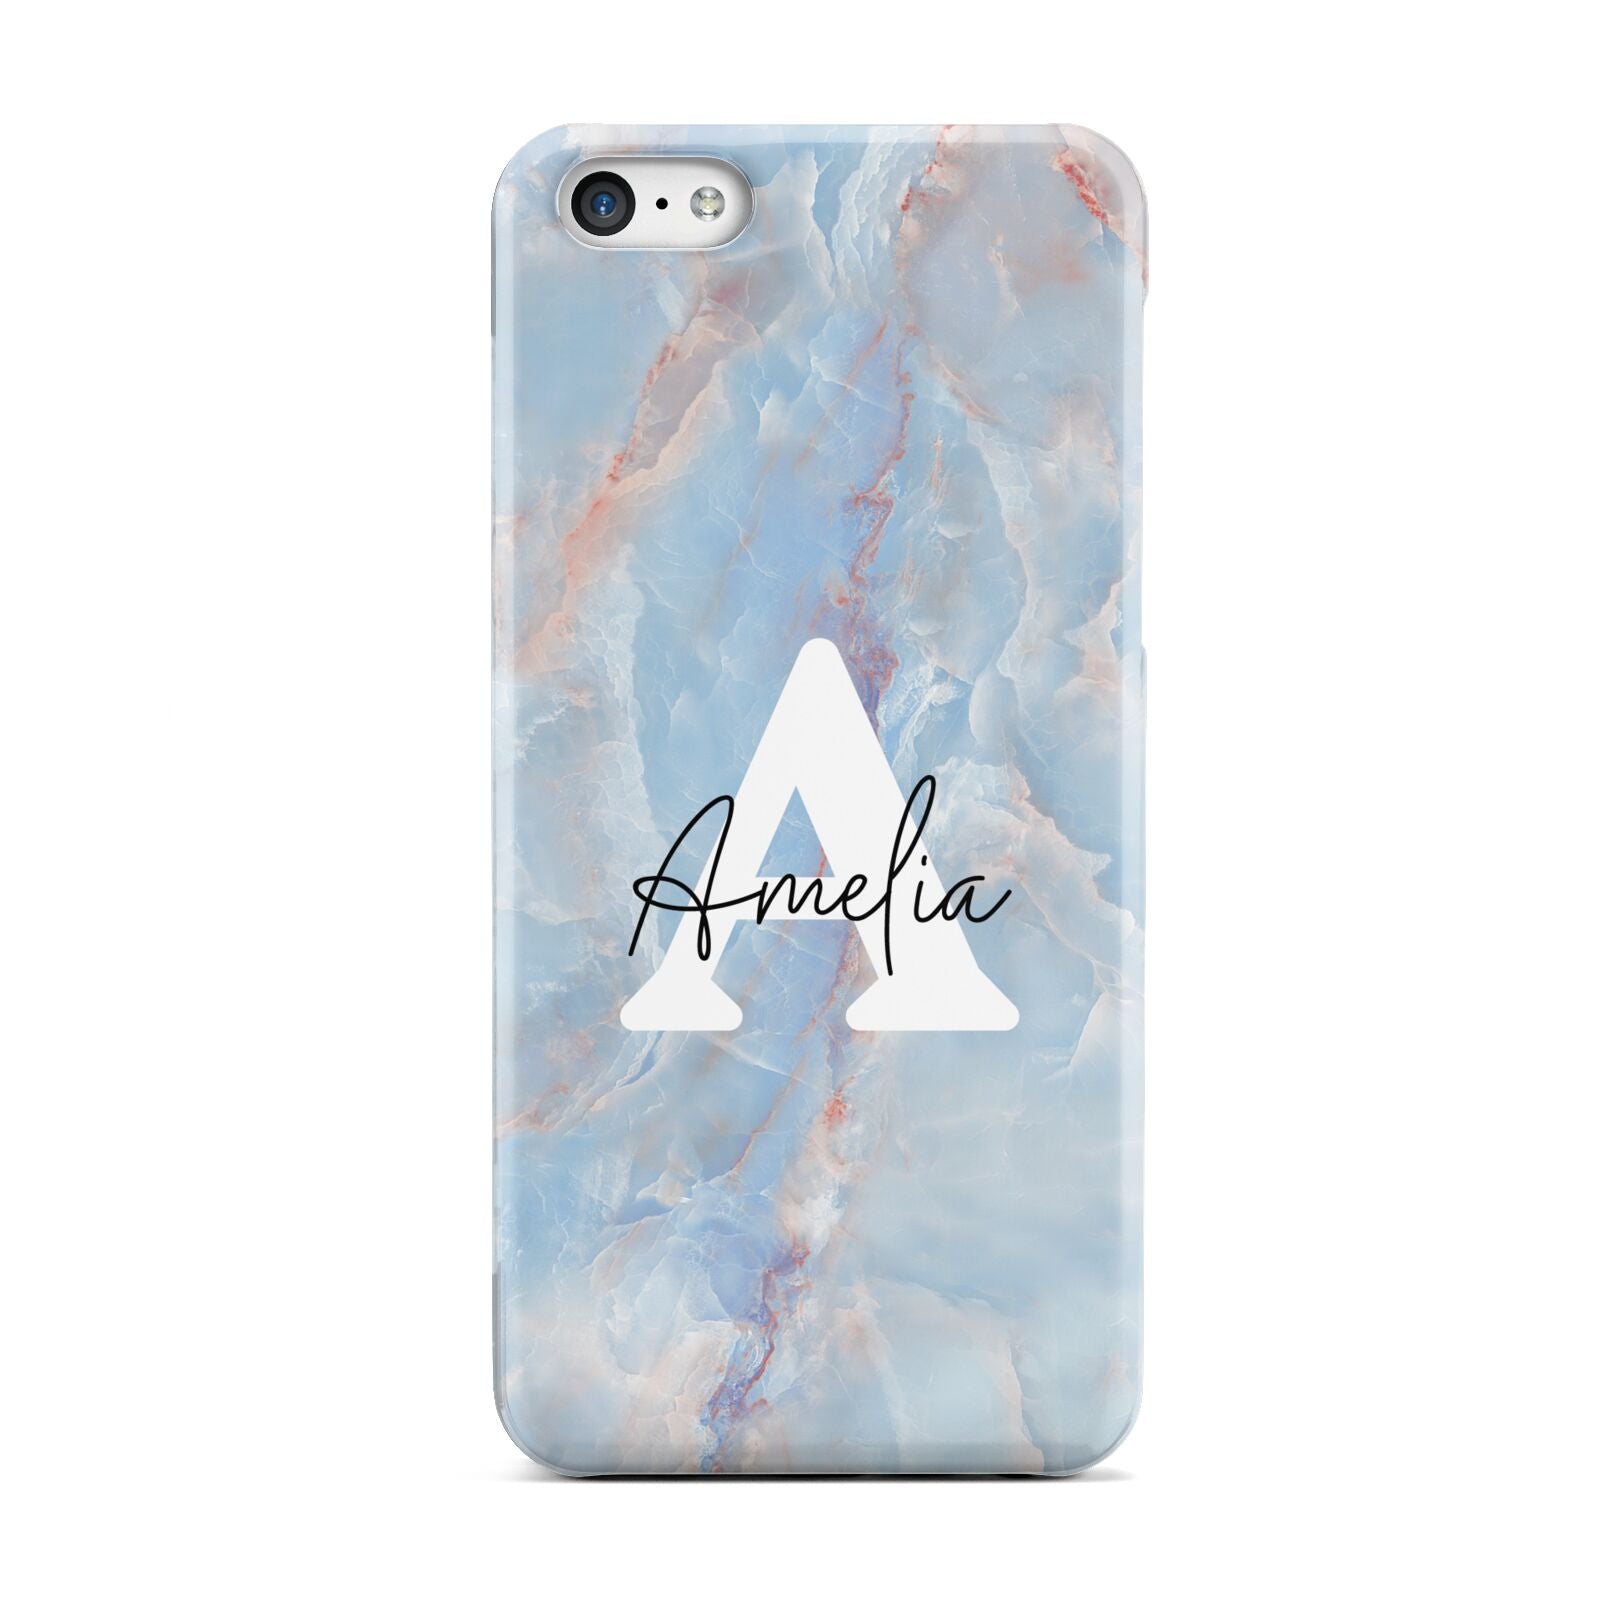 Blue Onyx Marble Apple iPhone 5c Case